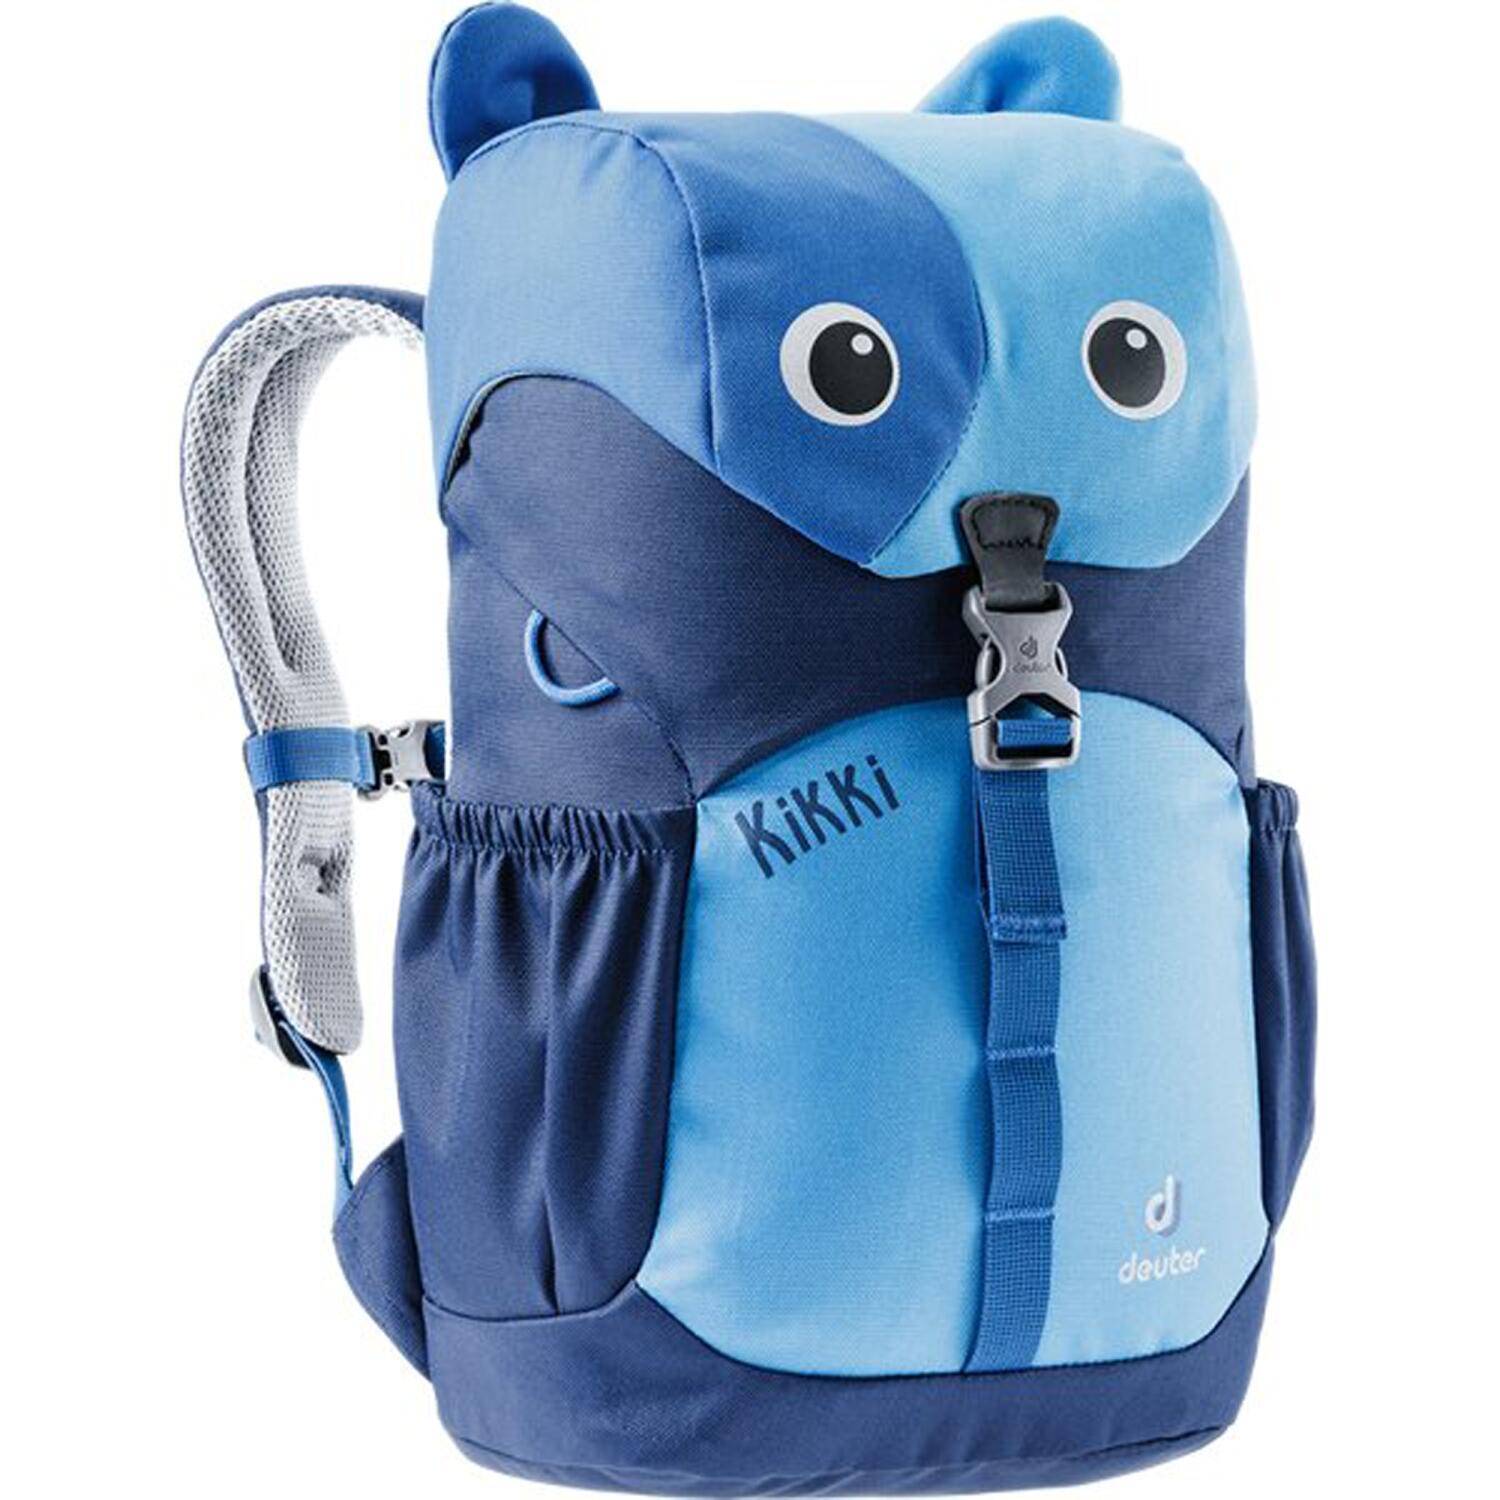 DEUTER Kinder Kikki coolblue-Midnight Children's Backpack, One Size